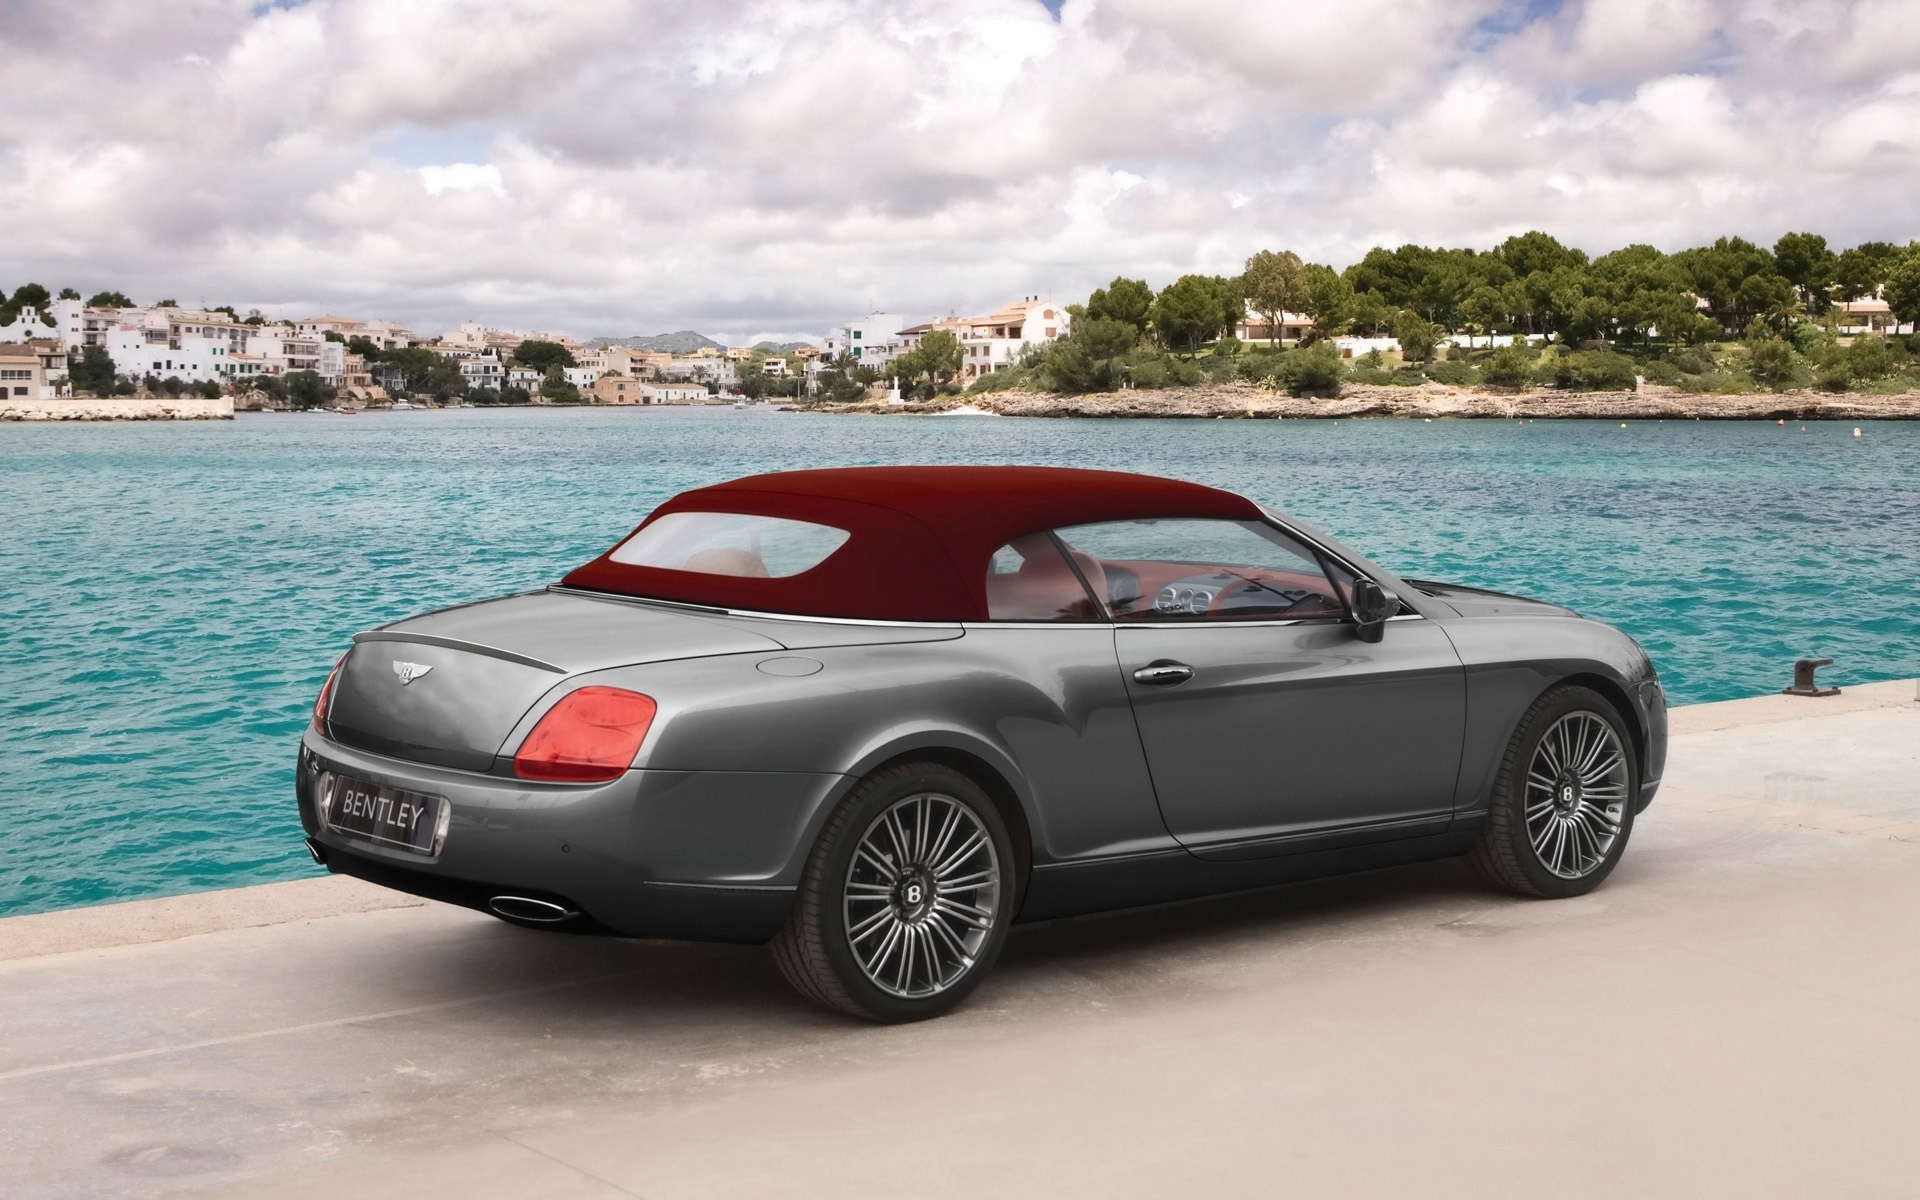 Bentley Continental GTC 2009 for 1920 x 1200 widescreen resolution